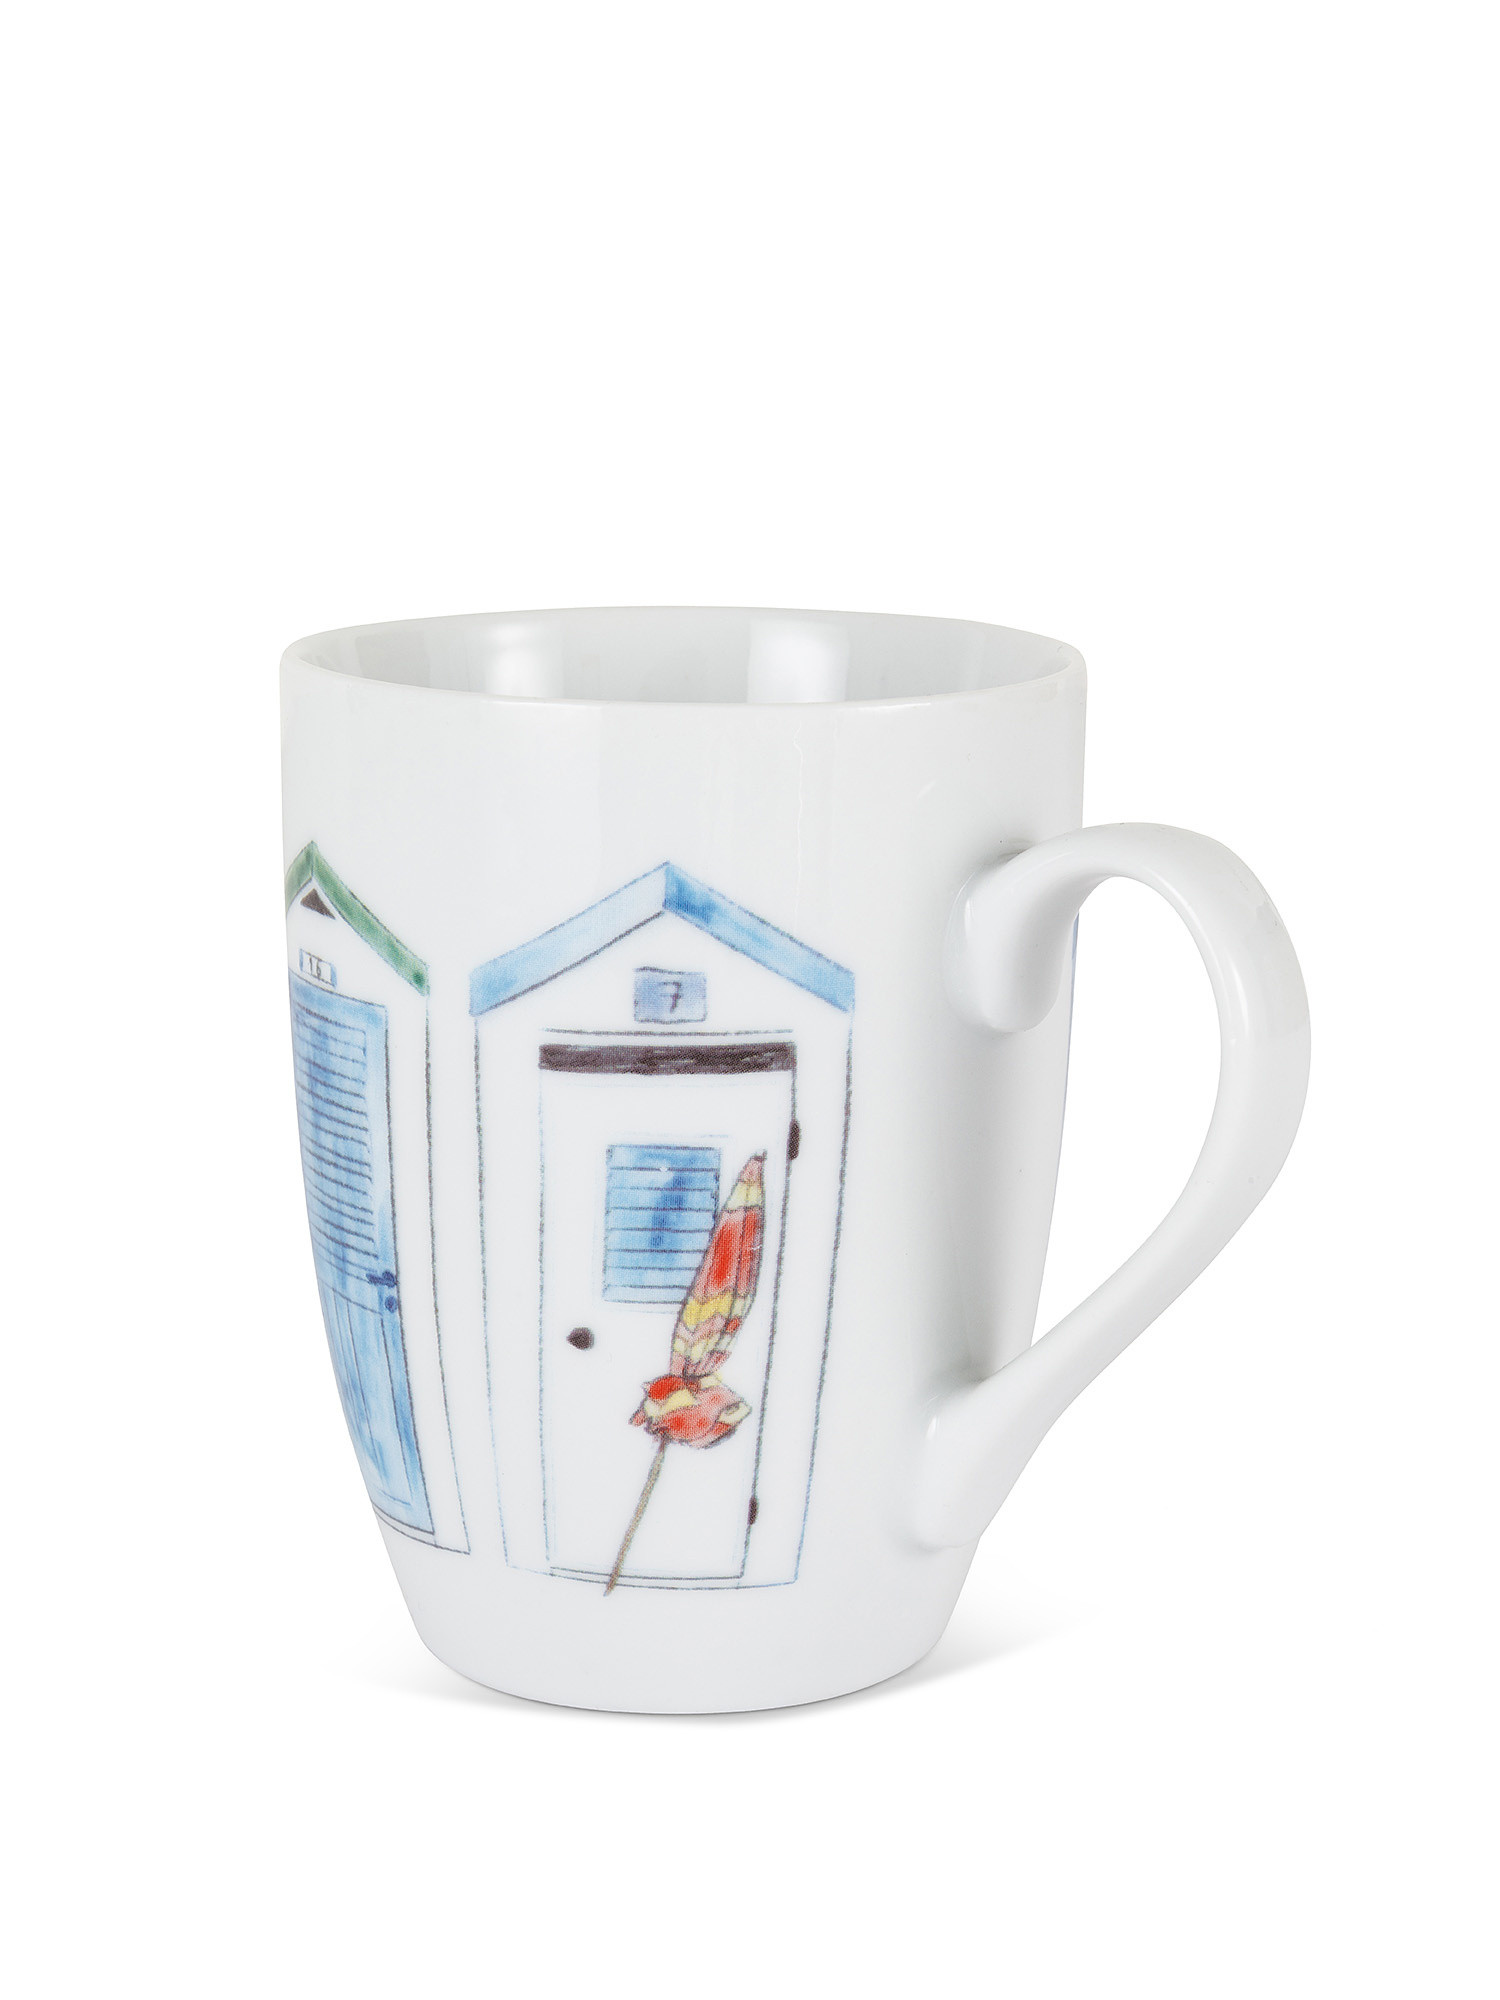 New bone china mug with cabins motif, White, large image number 1